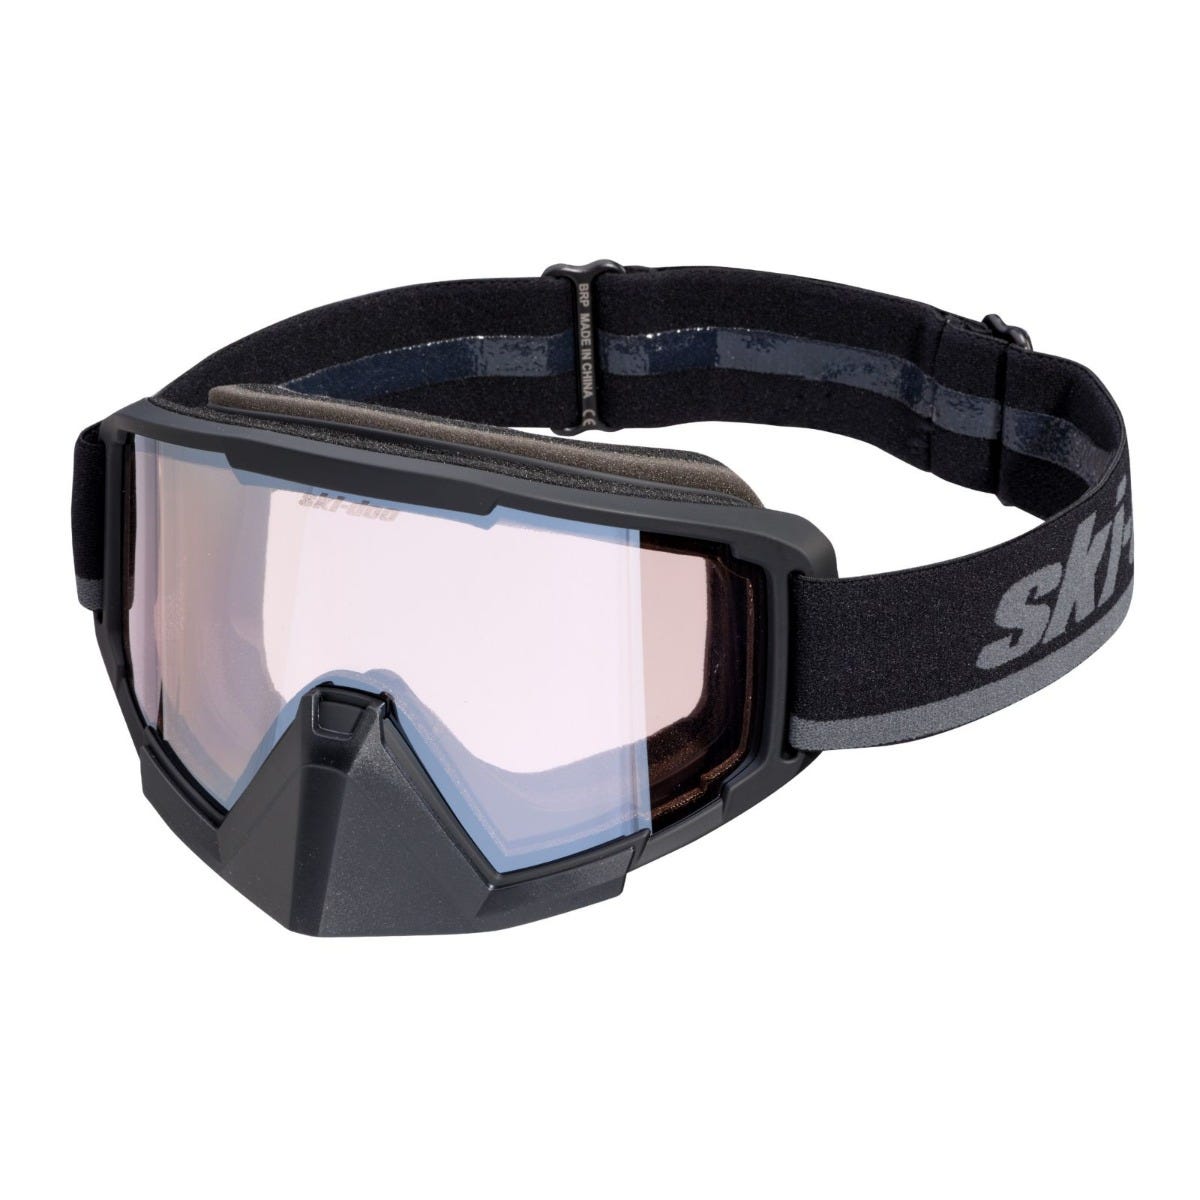 Ski-Doo Trench Goggles / Black / Onesize